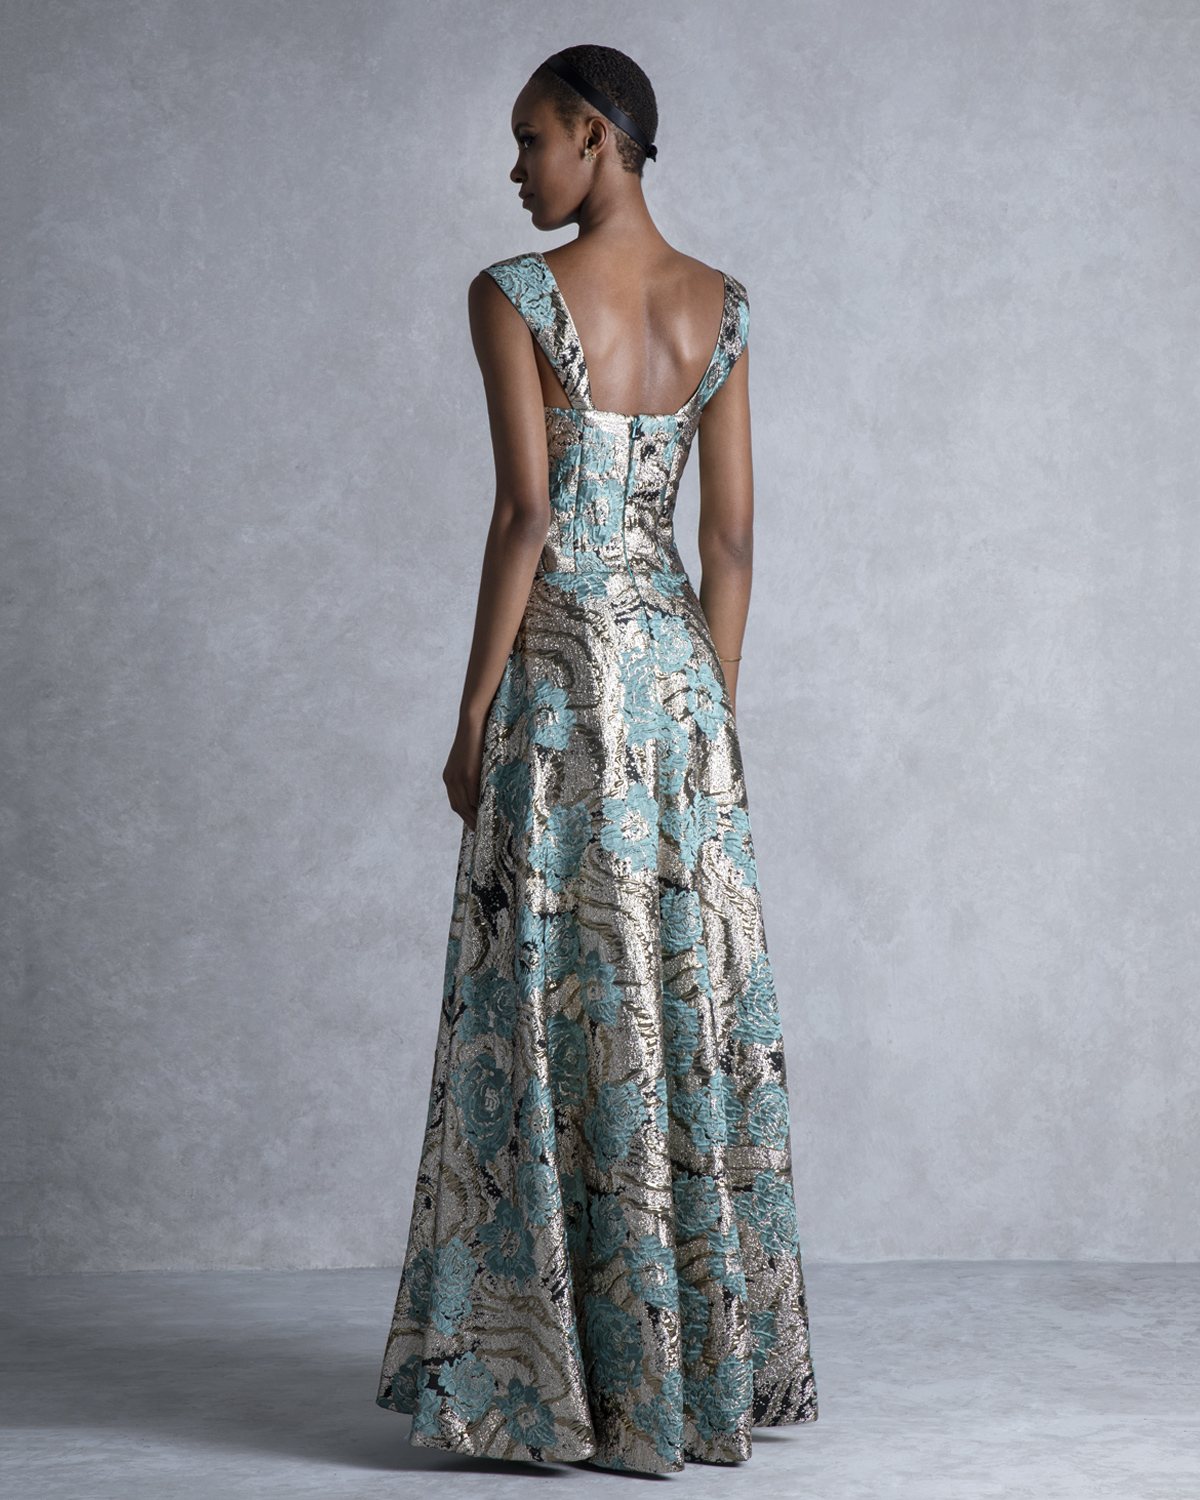 Long evening printed dress with shining brocade